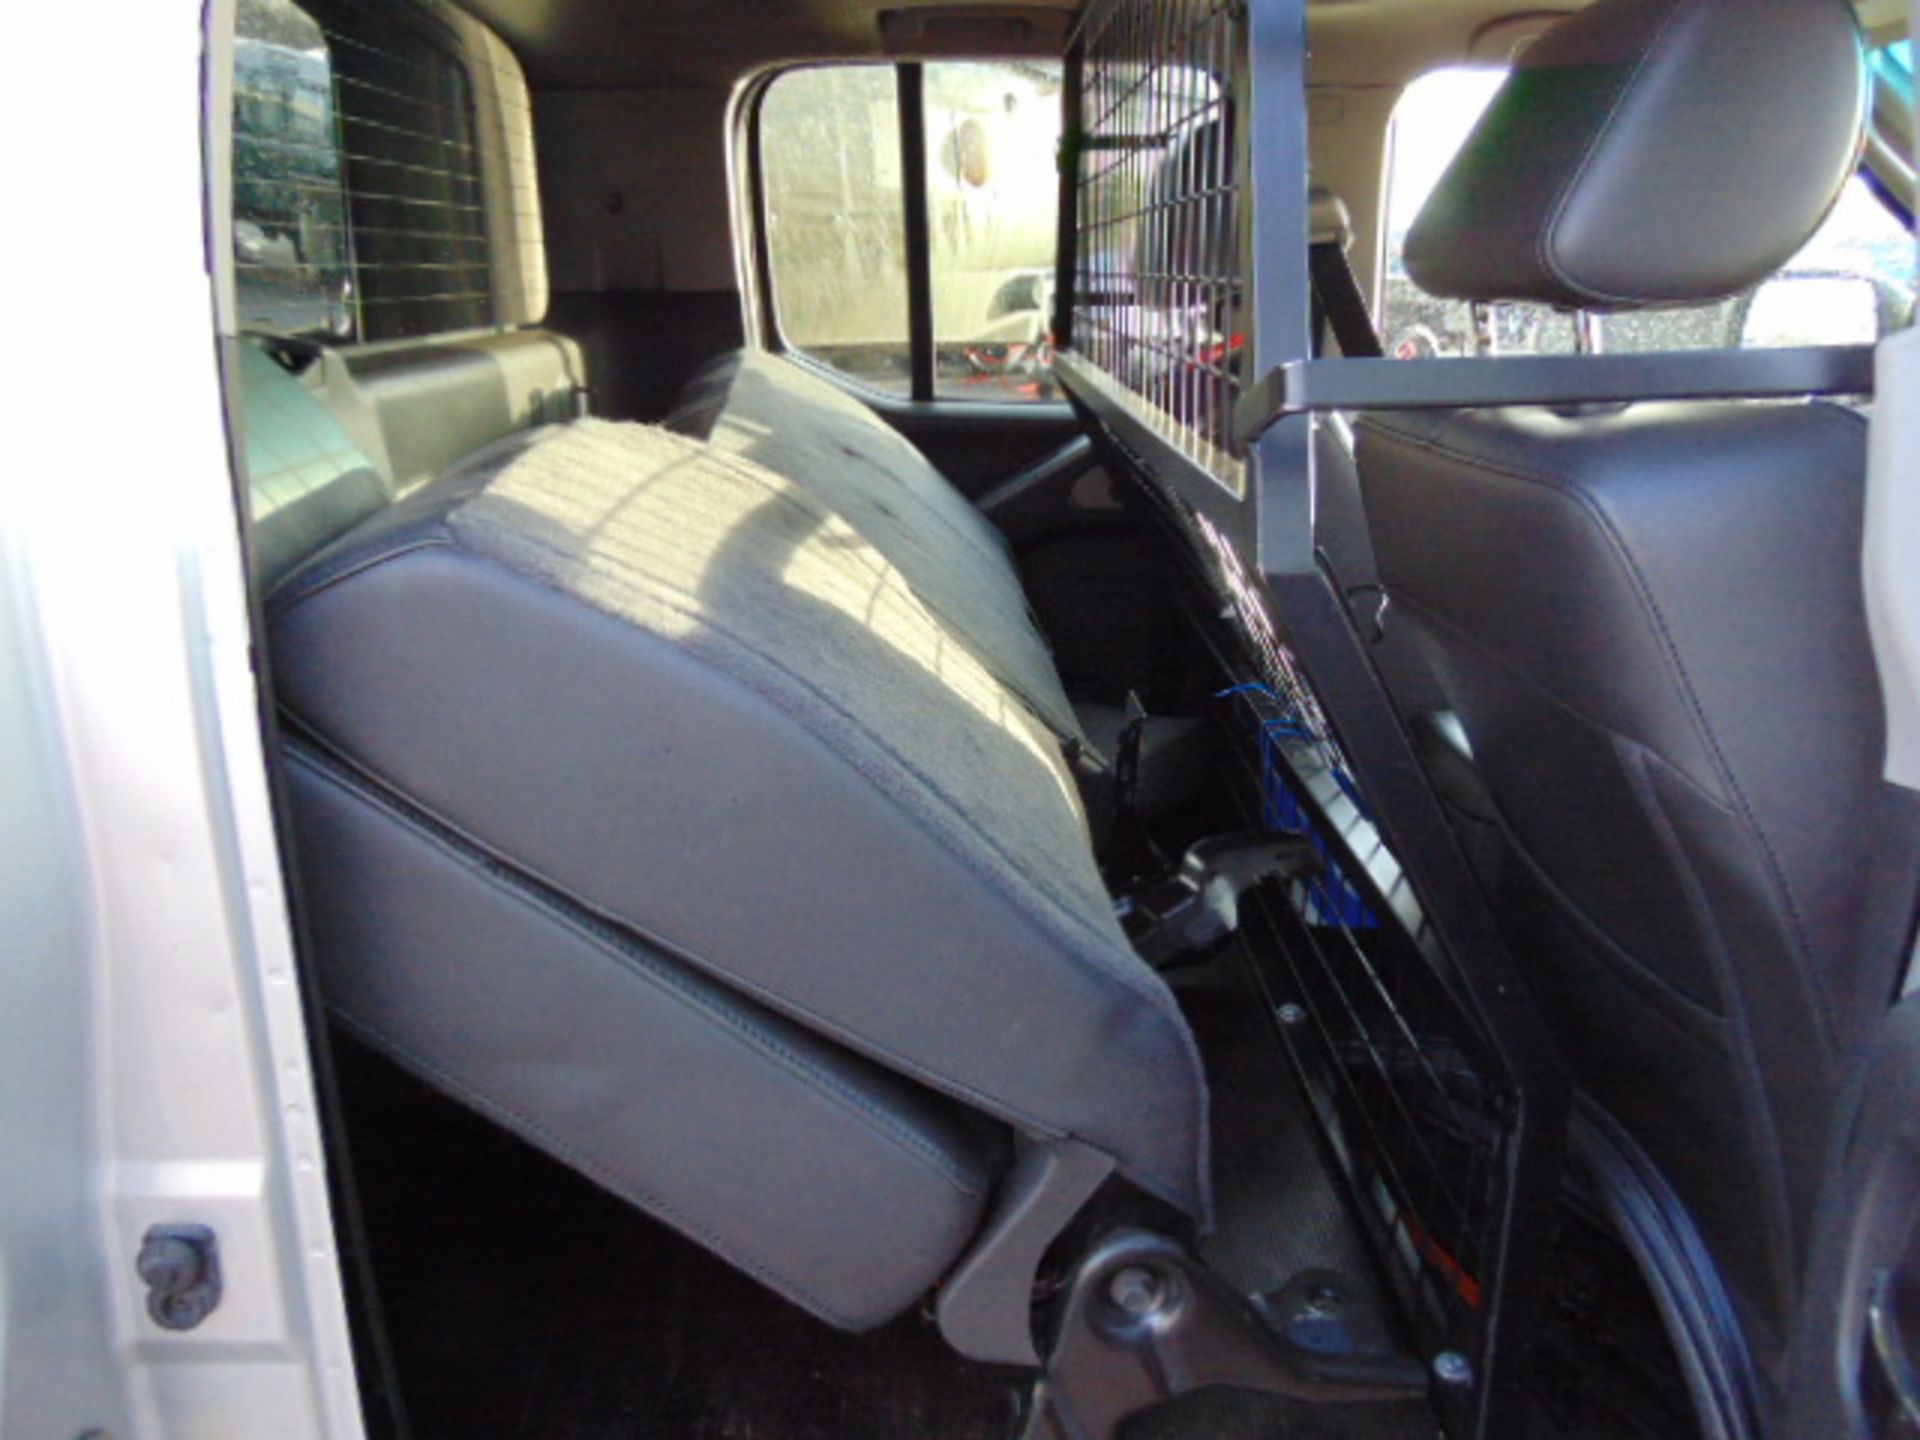 2008 Nissan Navara Aventura Double Cab 2.5 dCi Incident Response Vehicle - Image 15 of 23